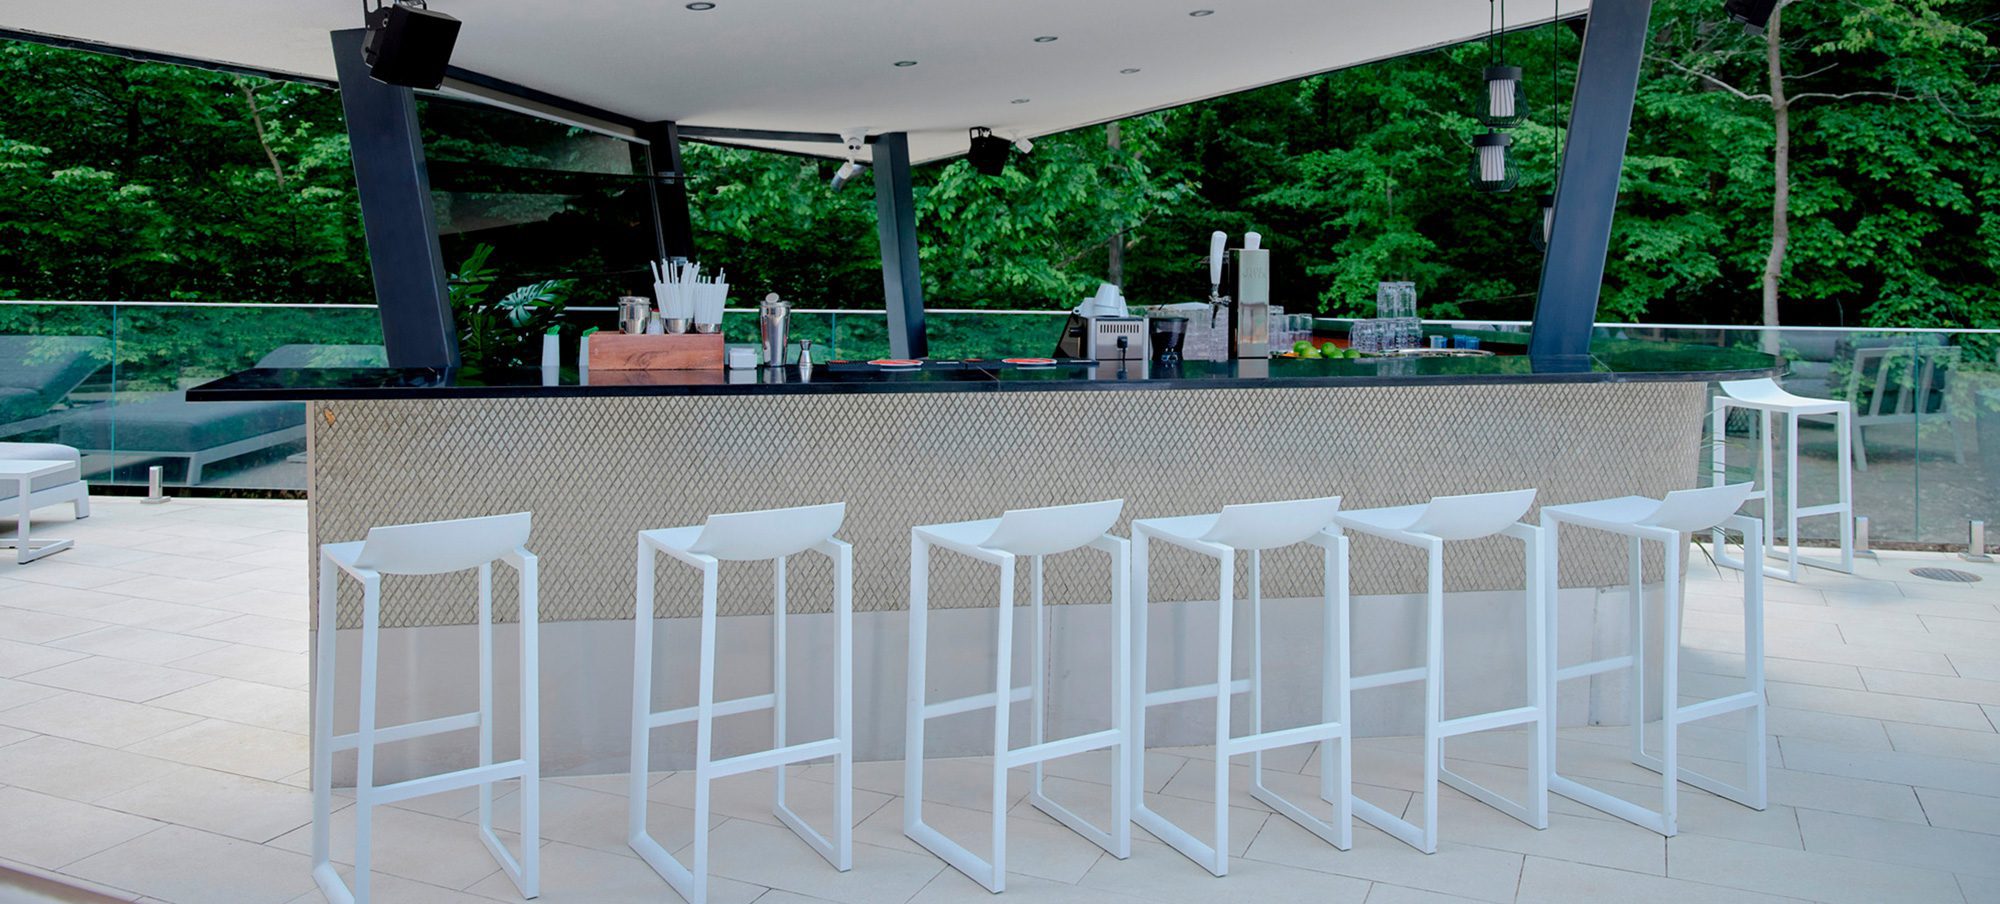 Outdoor hotel furniture Wall Street stools by Vondom